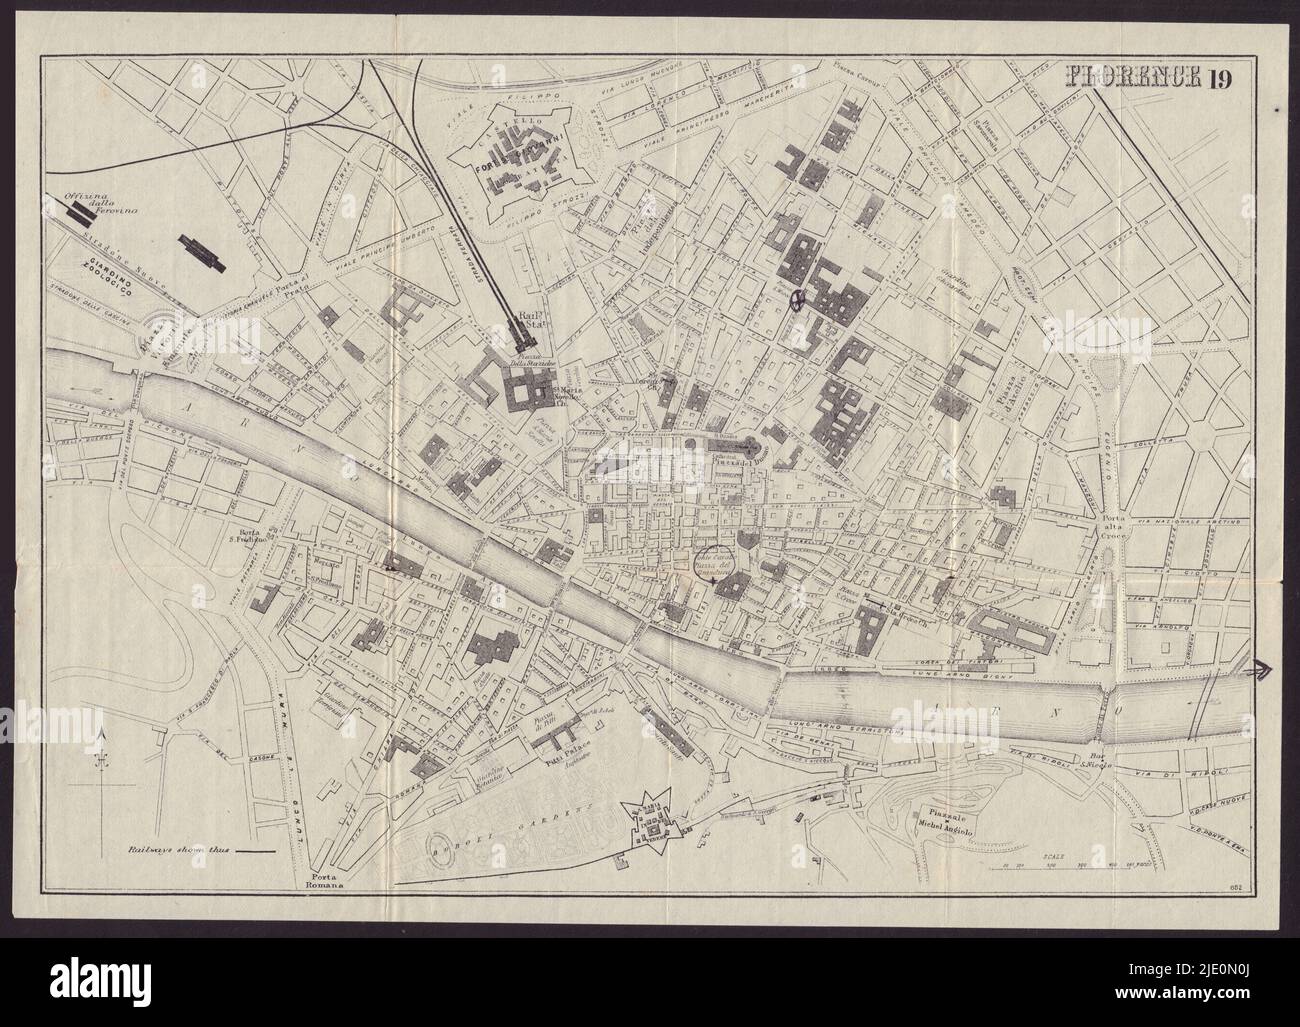 ITALIA. Florencia. Firenze. Plano ciudad mapa antiguo 1882 Foto de stock